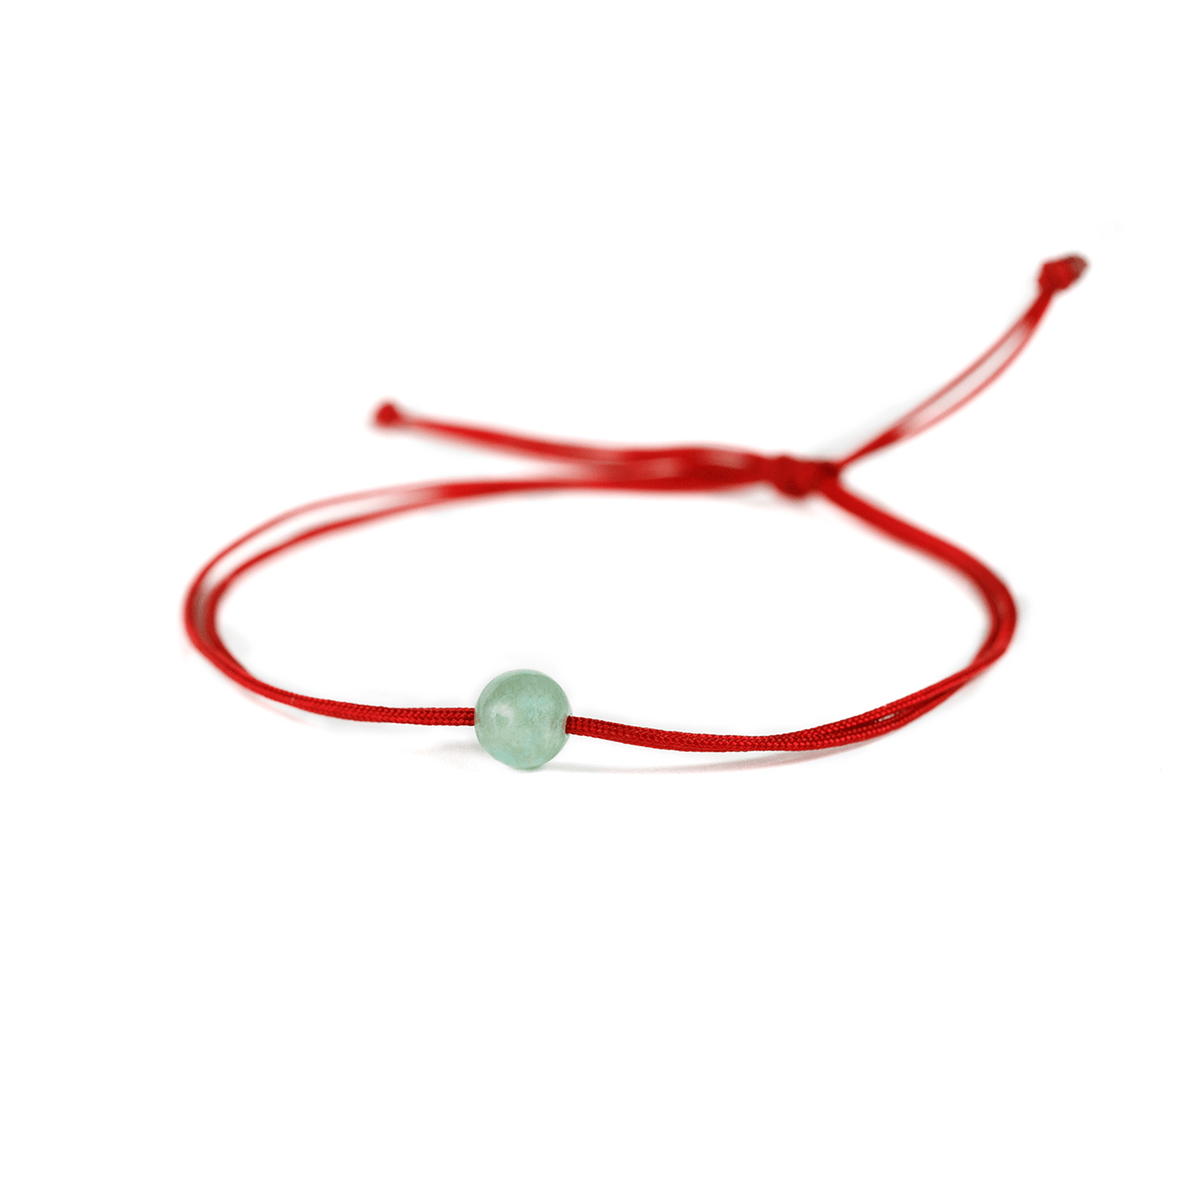 Jade stone on adjustable red nylon string